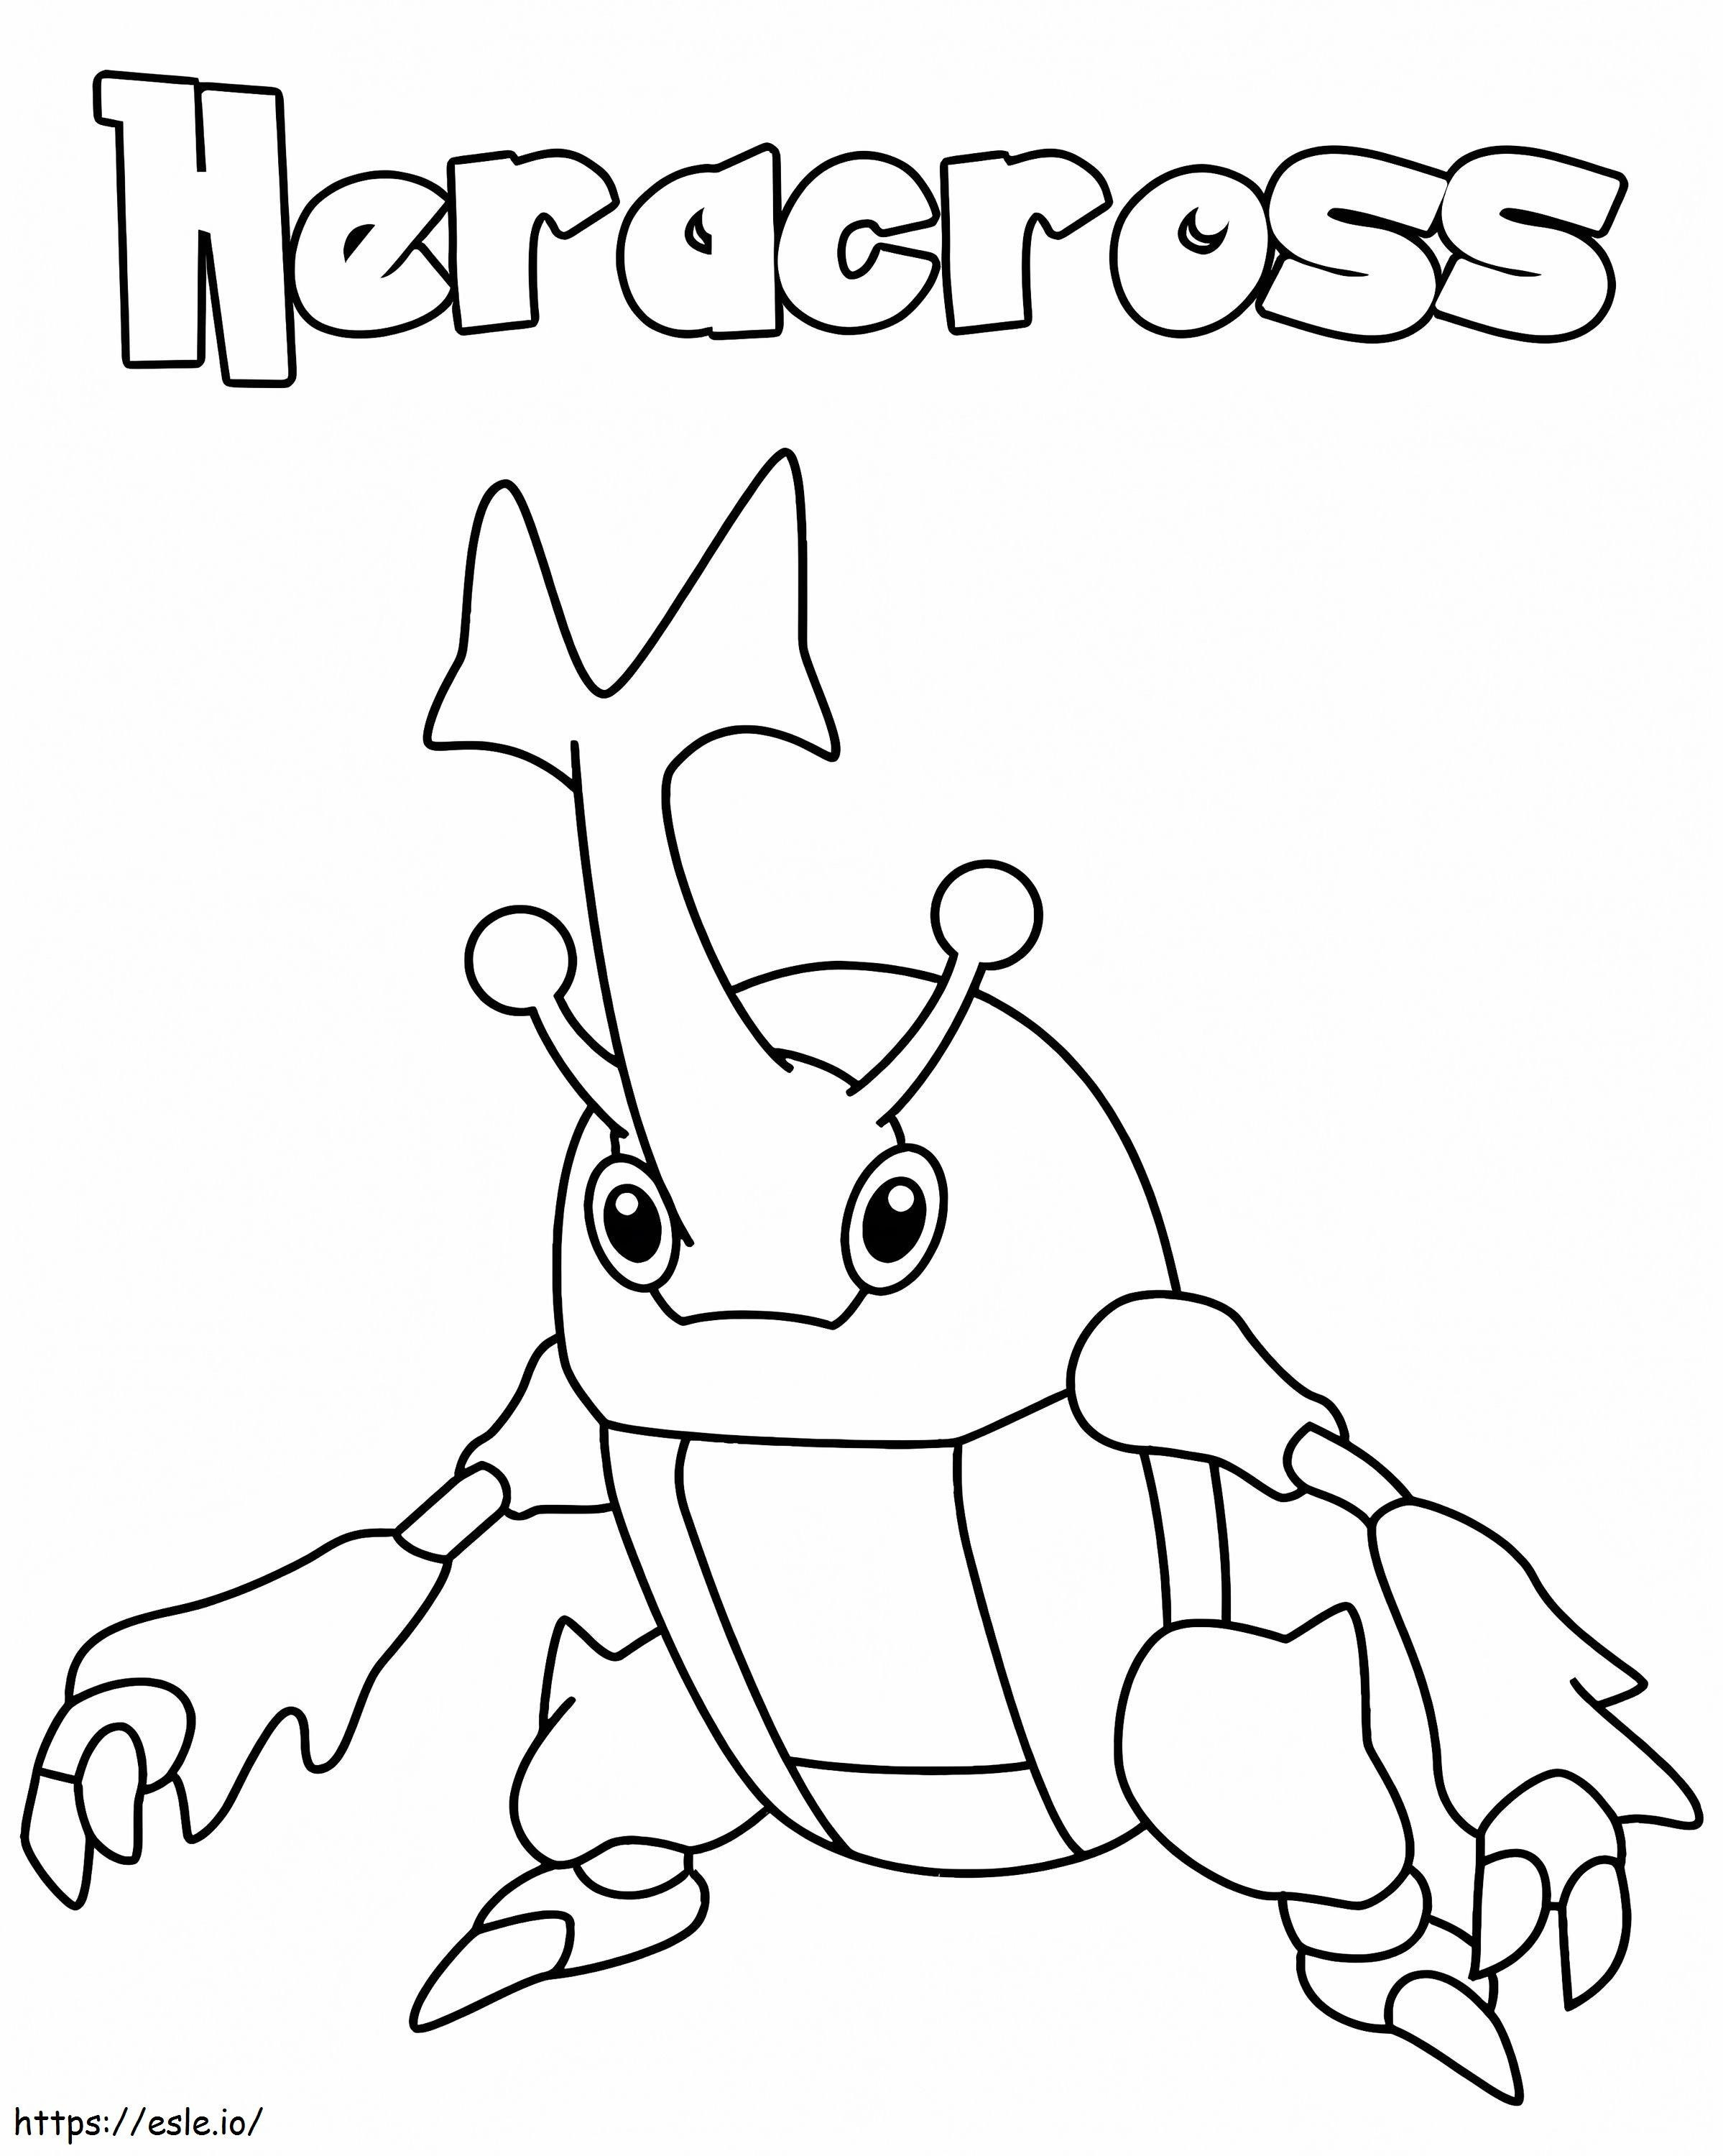 Cooles Heracross-Pokémon ausmalbilder